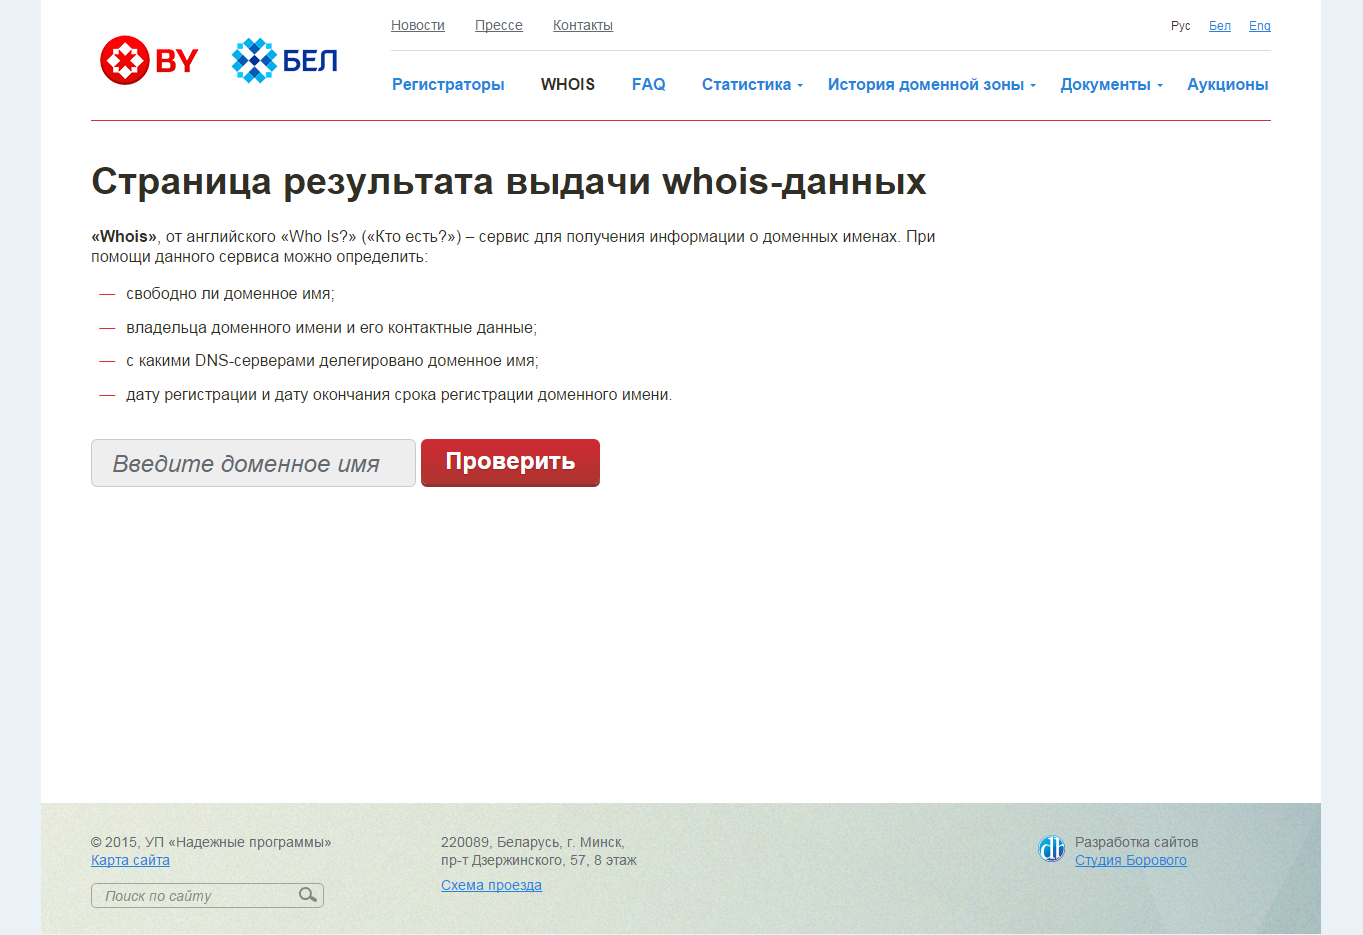 сайт национальных доменных зон беларуси .by и .бел